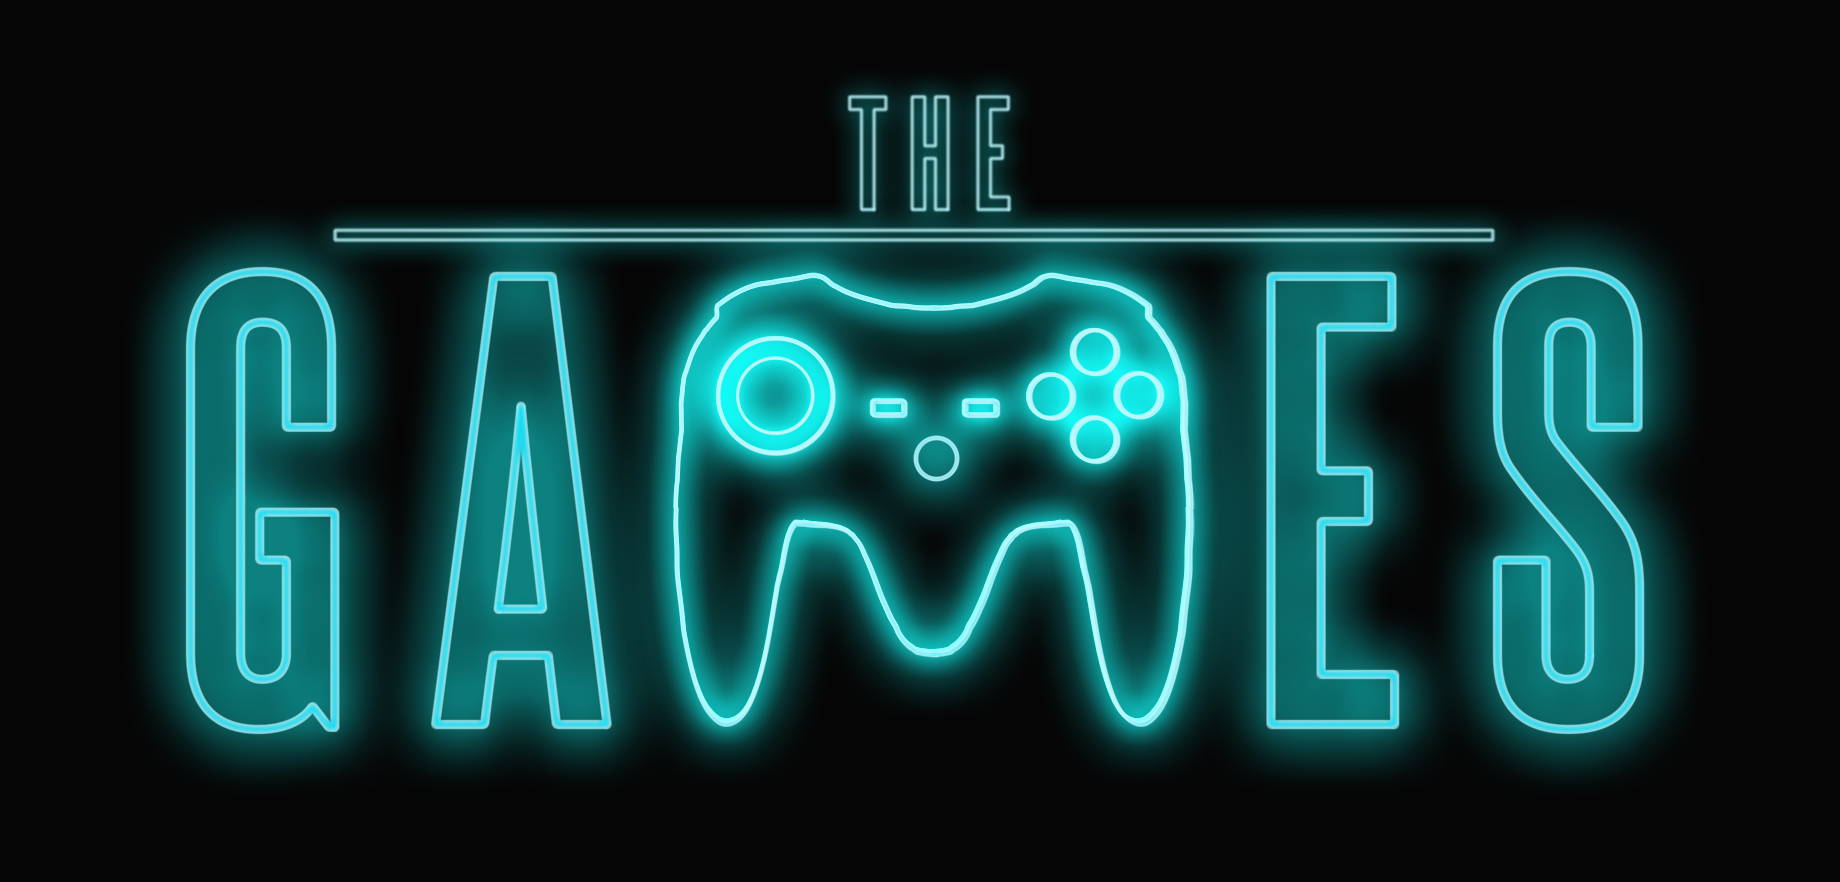 the-games-logo.jpg